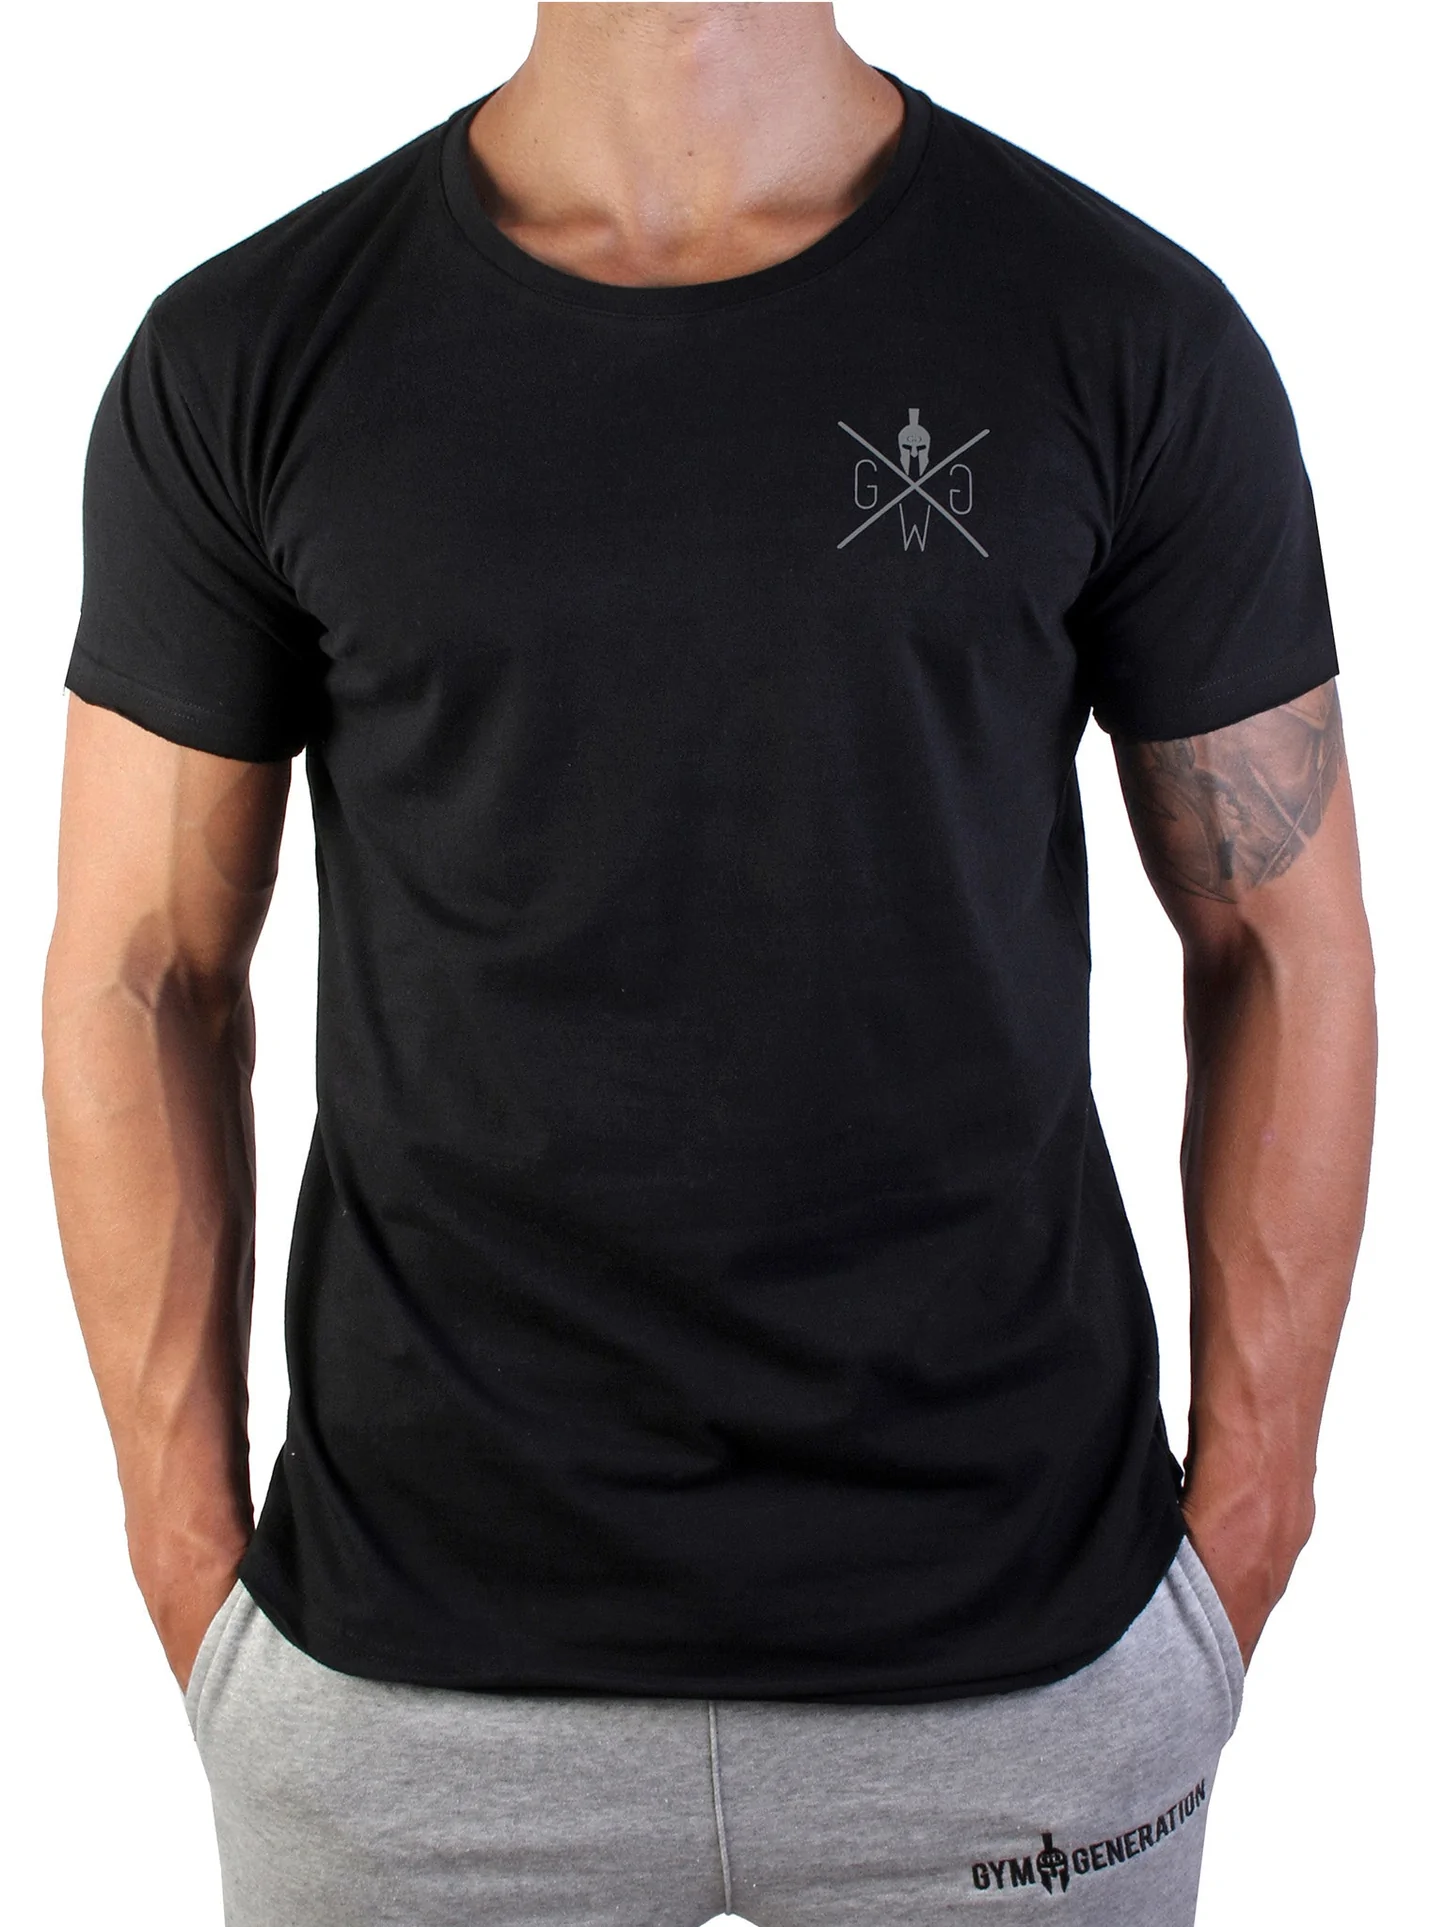 Gym Generation Urban Warrior T-Shirt black